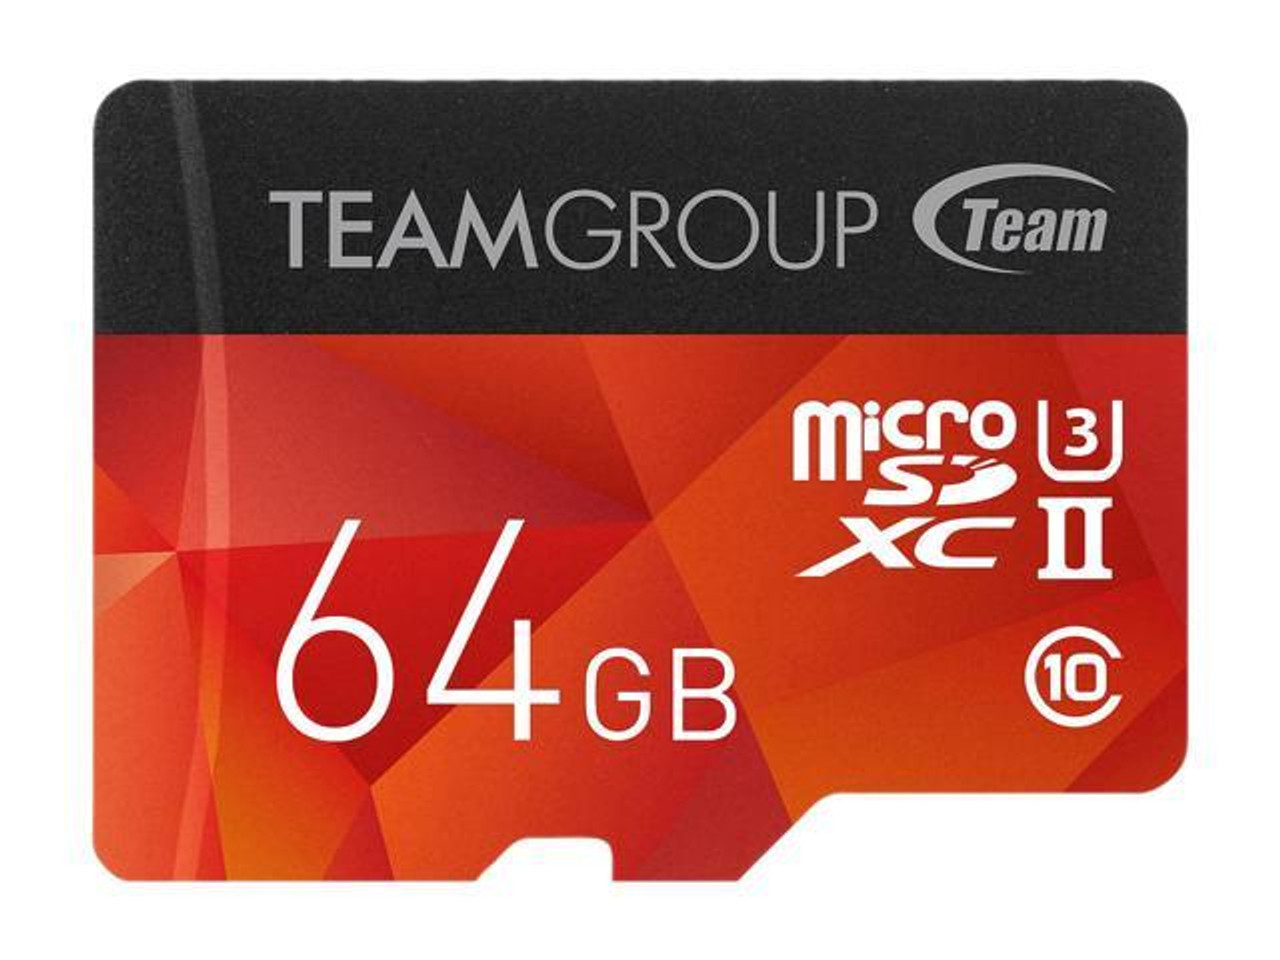 TEAM GROUP MicroSD XTREEM Micro SDXC UHS-II U3 64GB MicroSD CARD for  professional photographer | AYOUB COMPUTERS | LEBANON